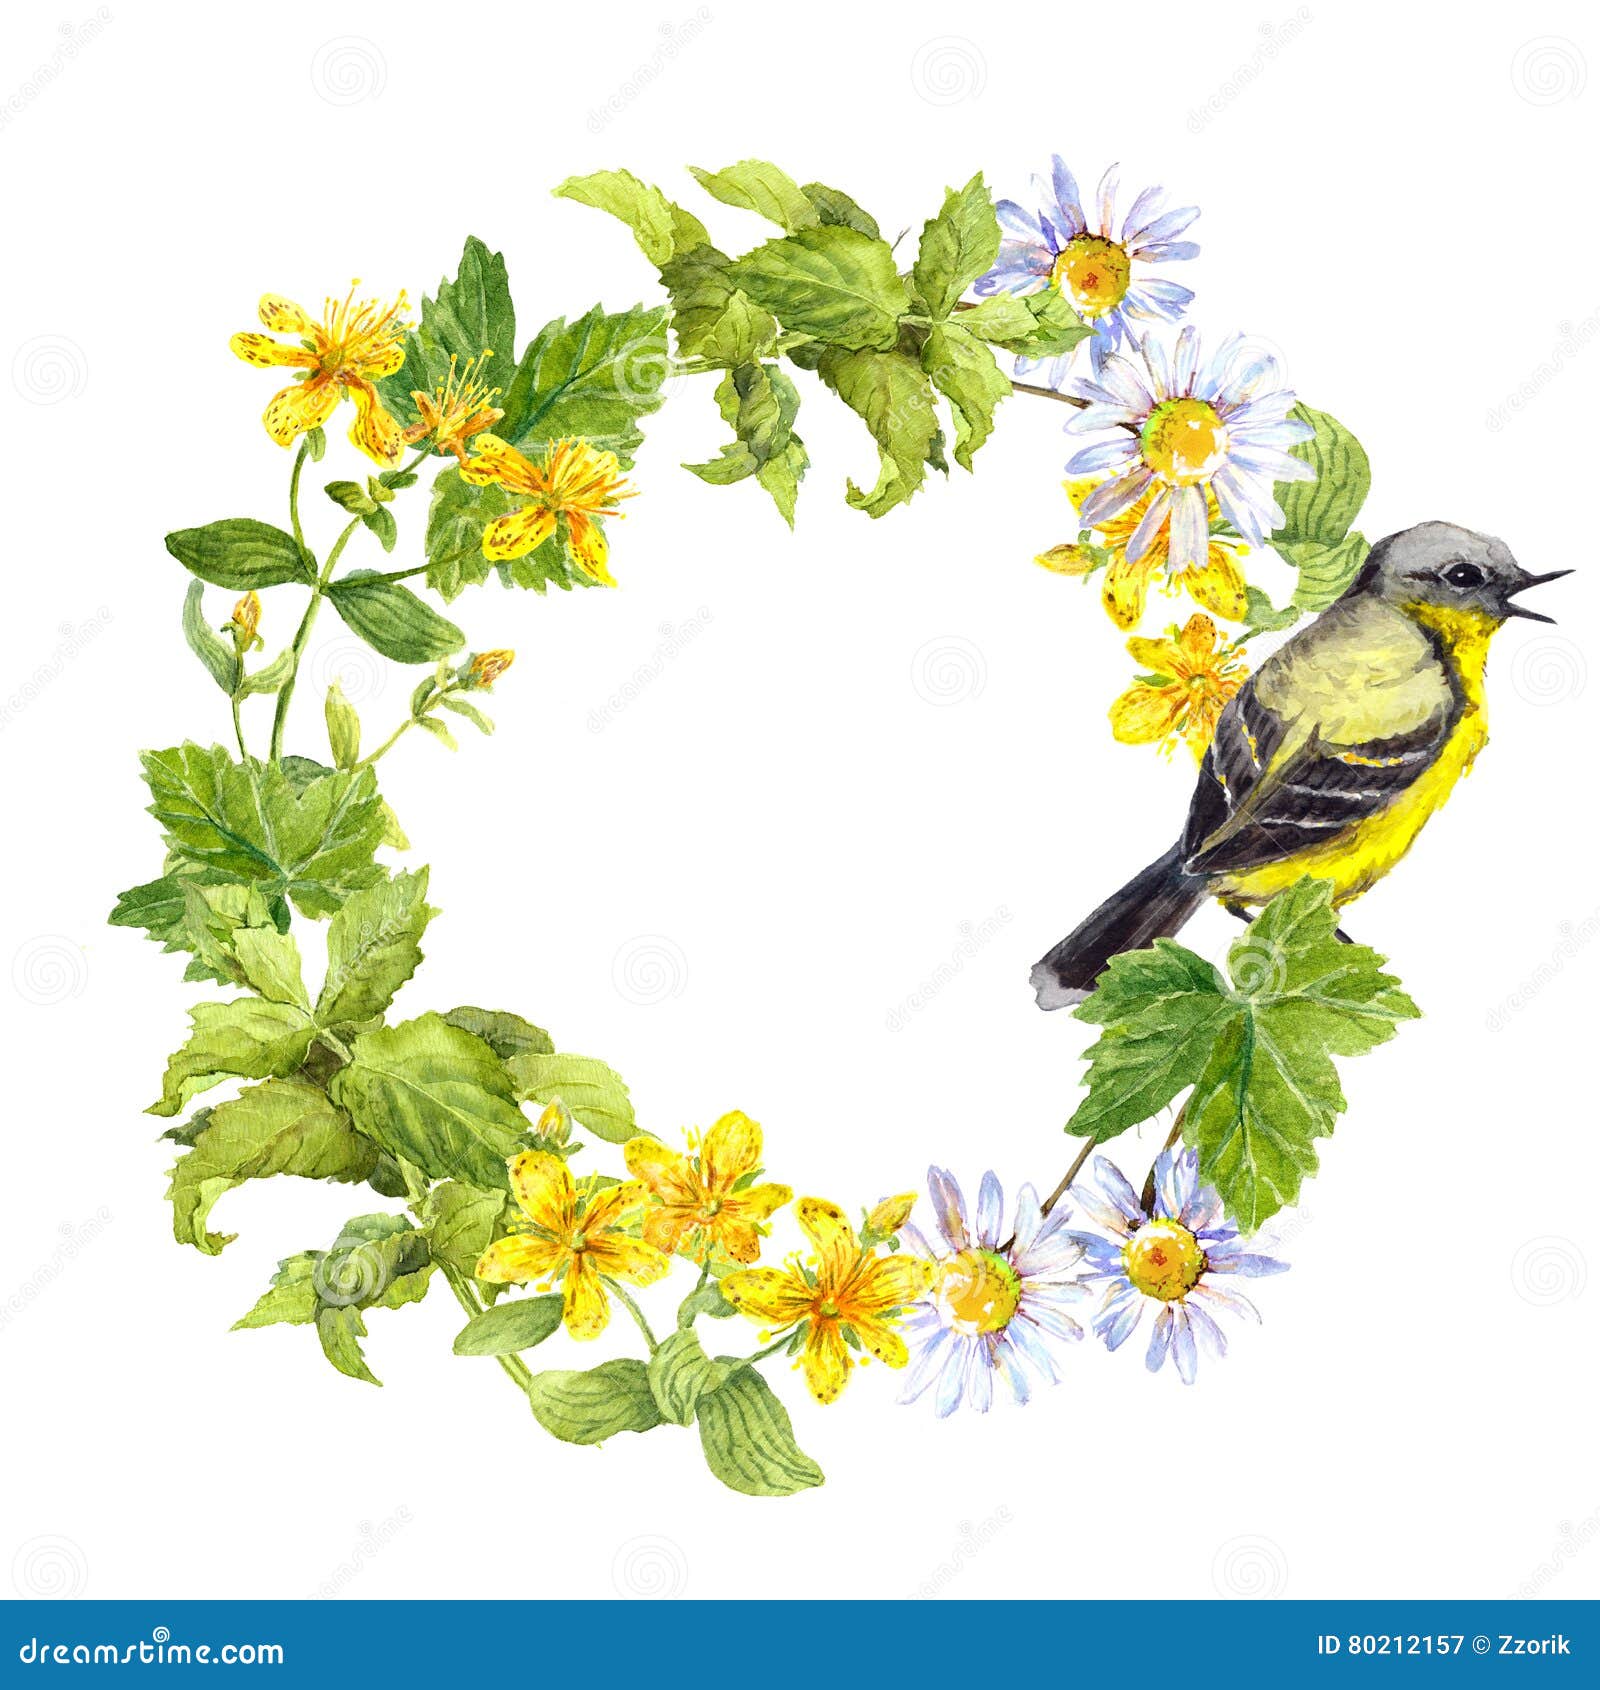 songbird, meadow flowers, grass. floral circle frame. watercolour wreath